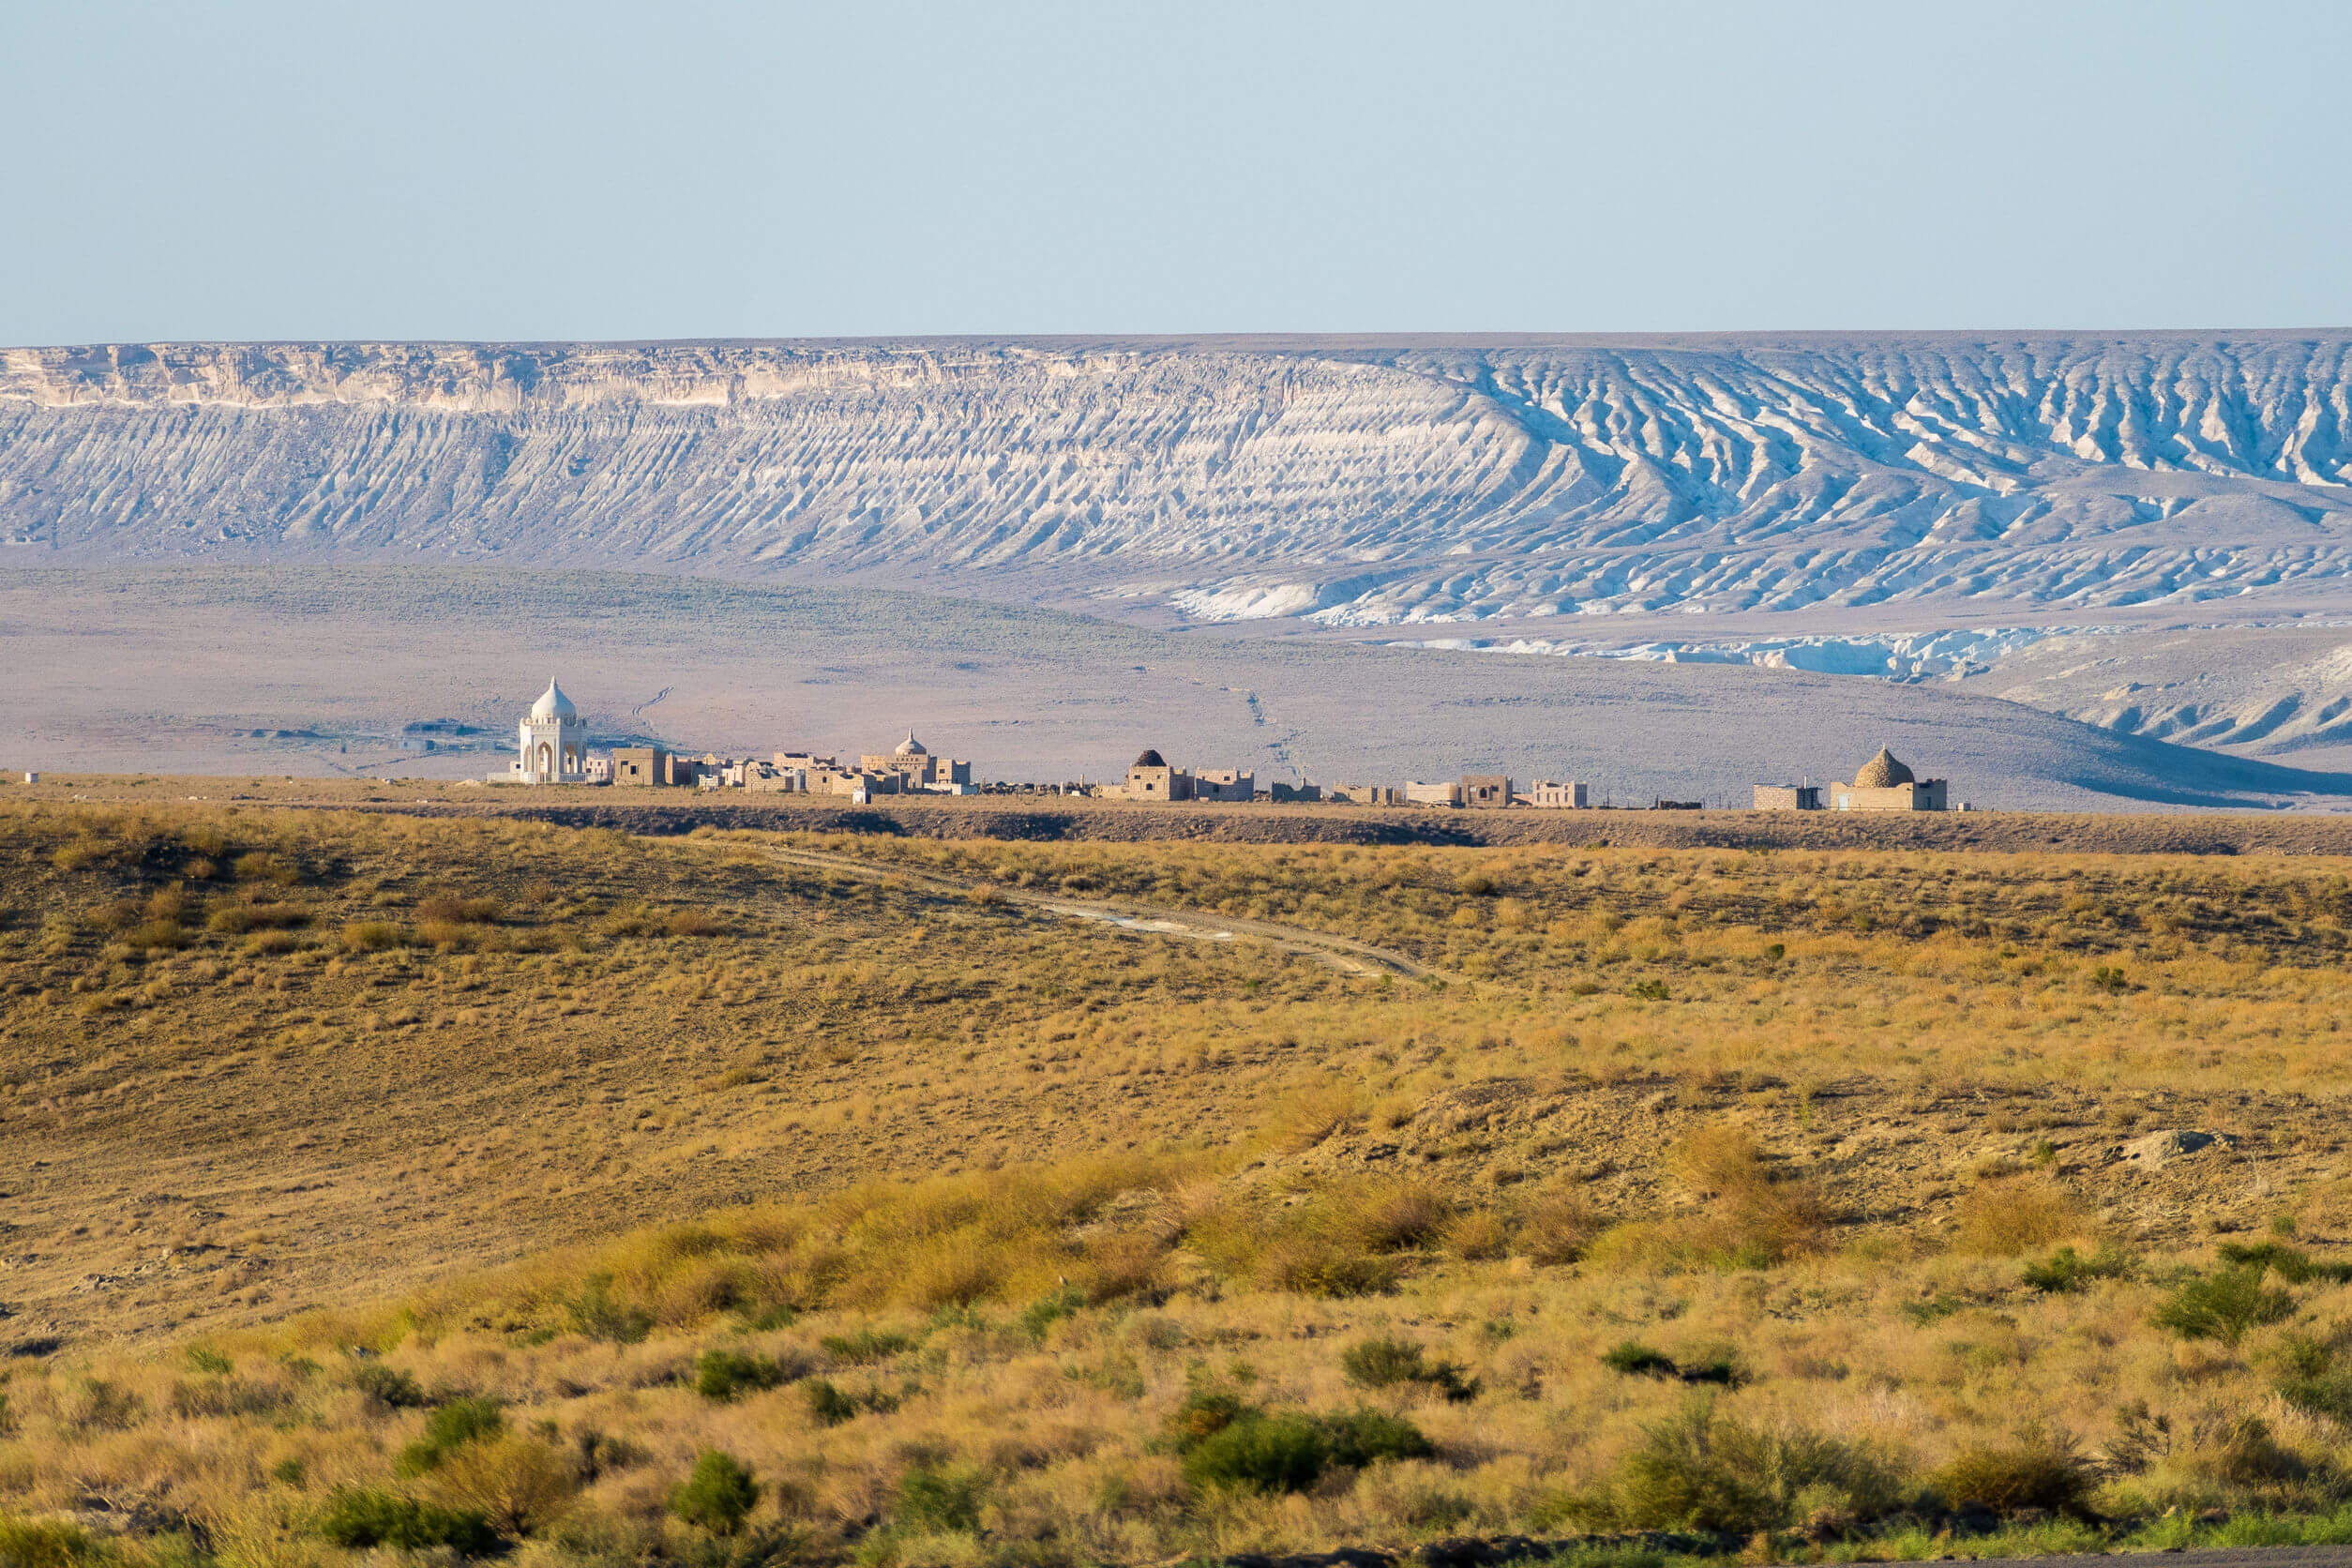 A necropolis set atop a desert plateau.